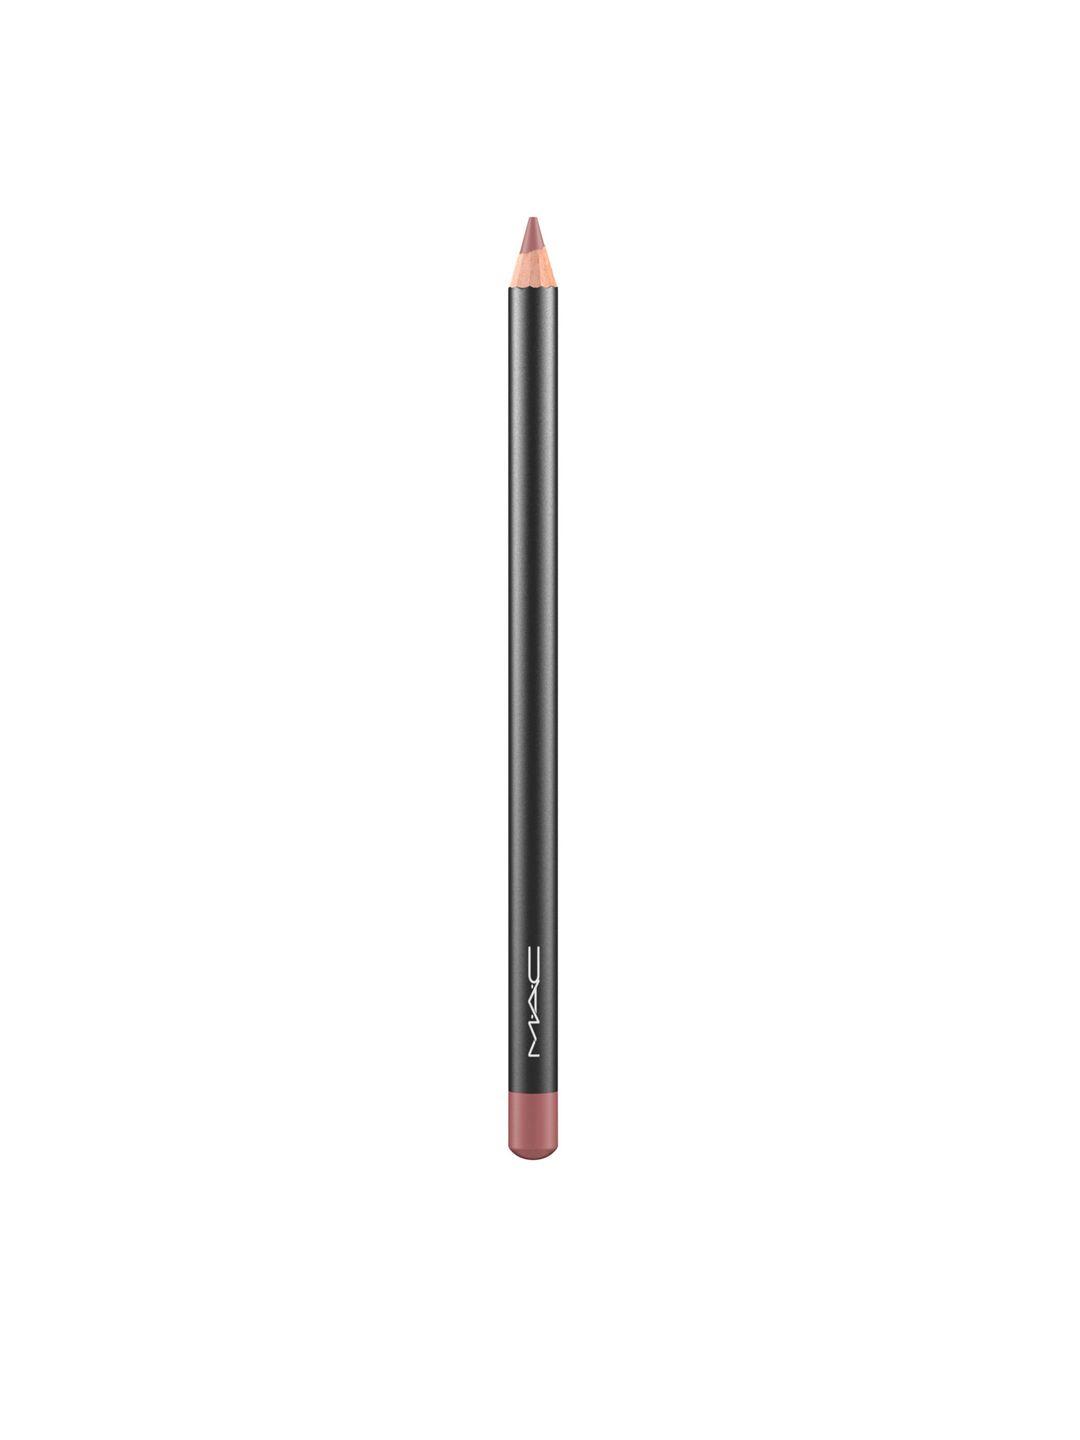 m.a.c longwear tansfer proof lip liner pencil - whirl 1.45 g